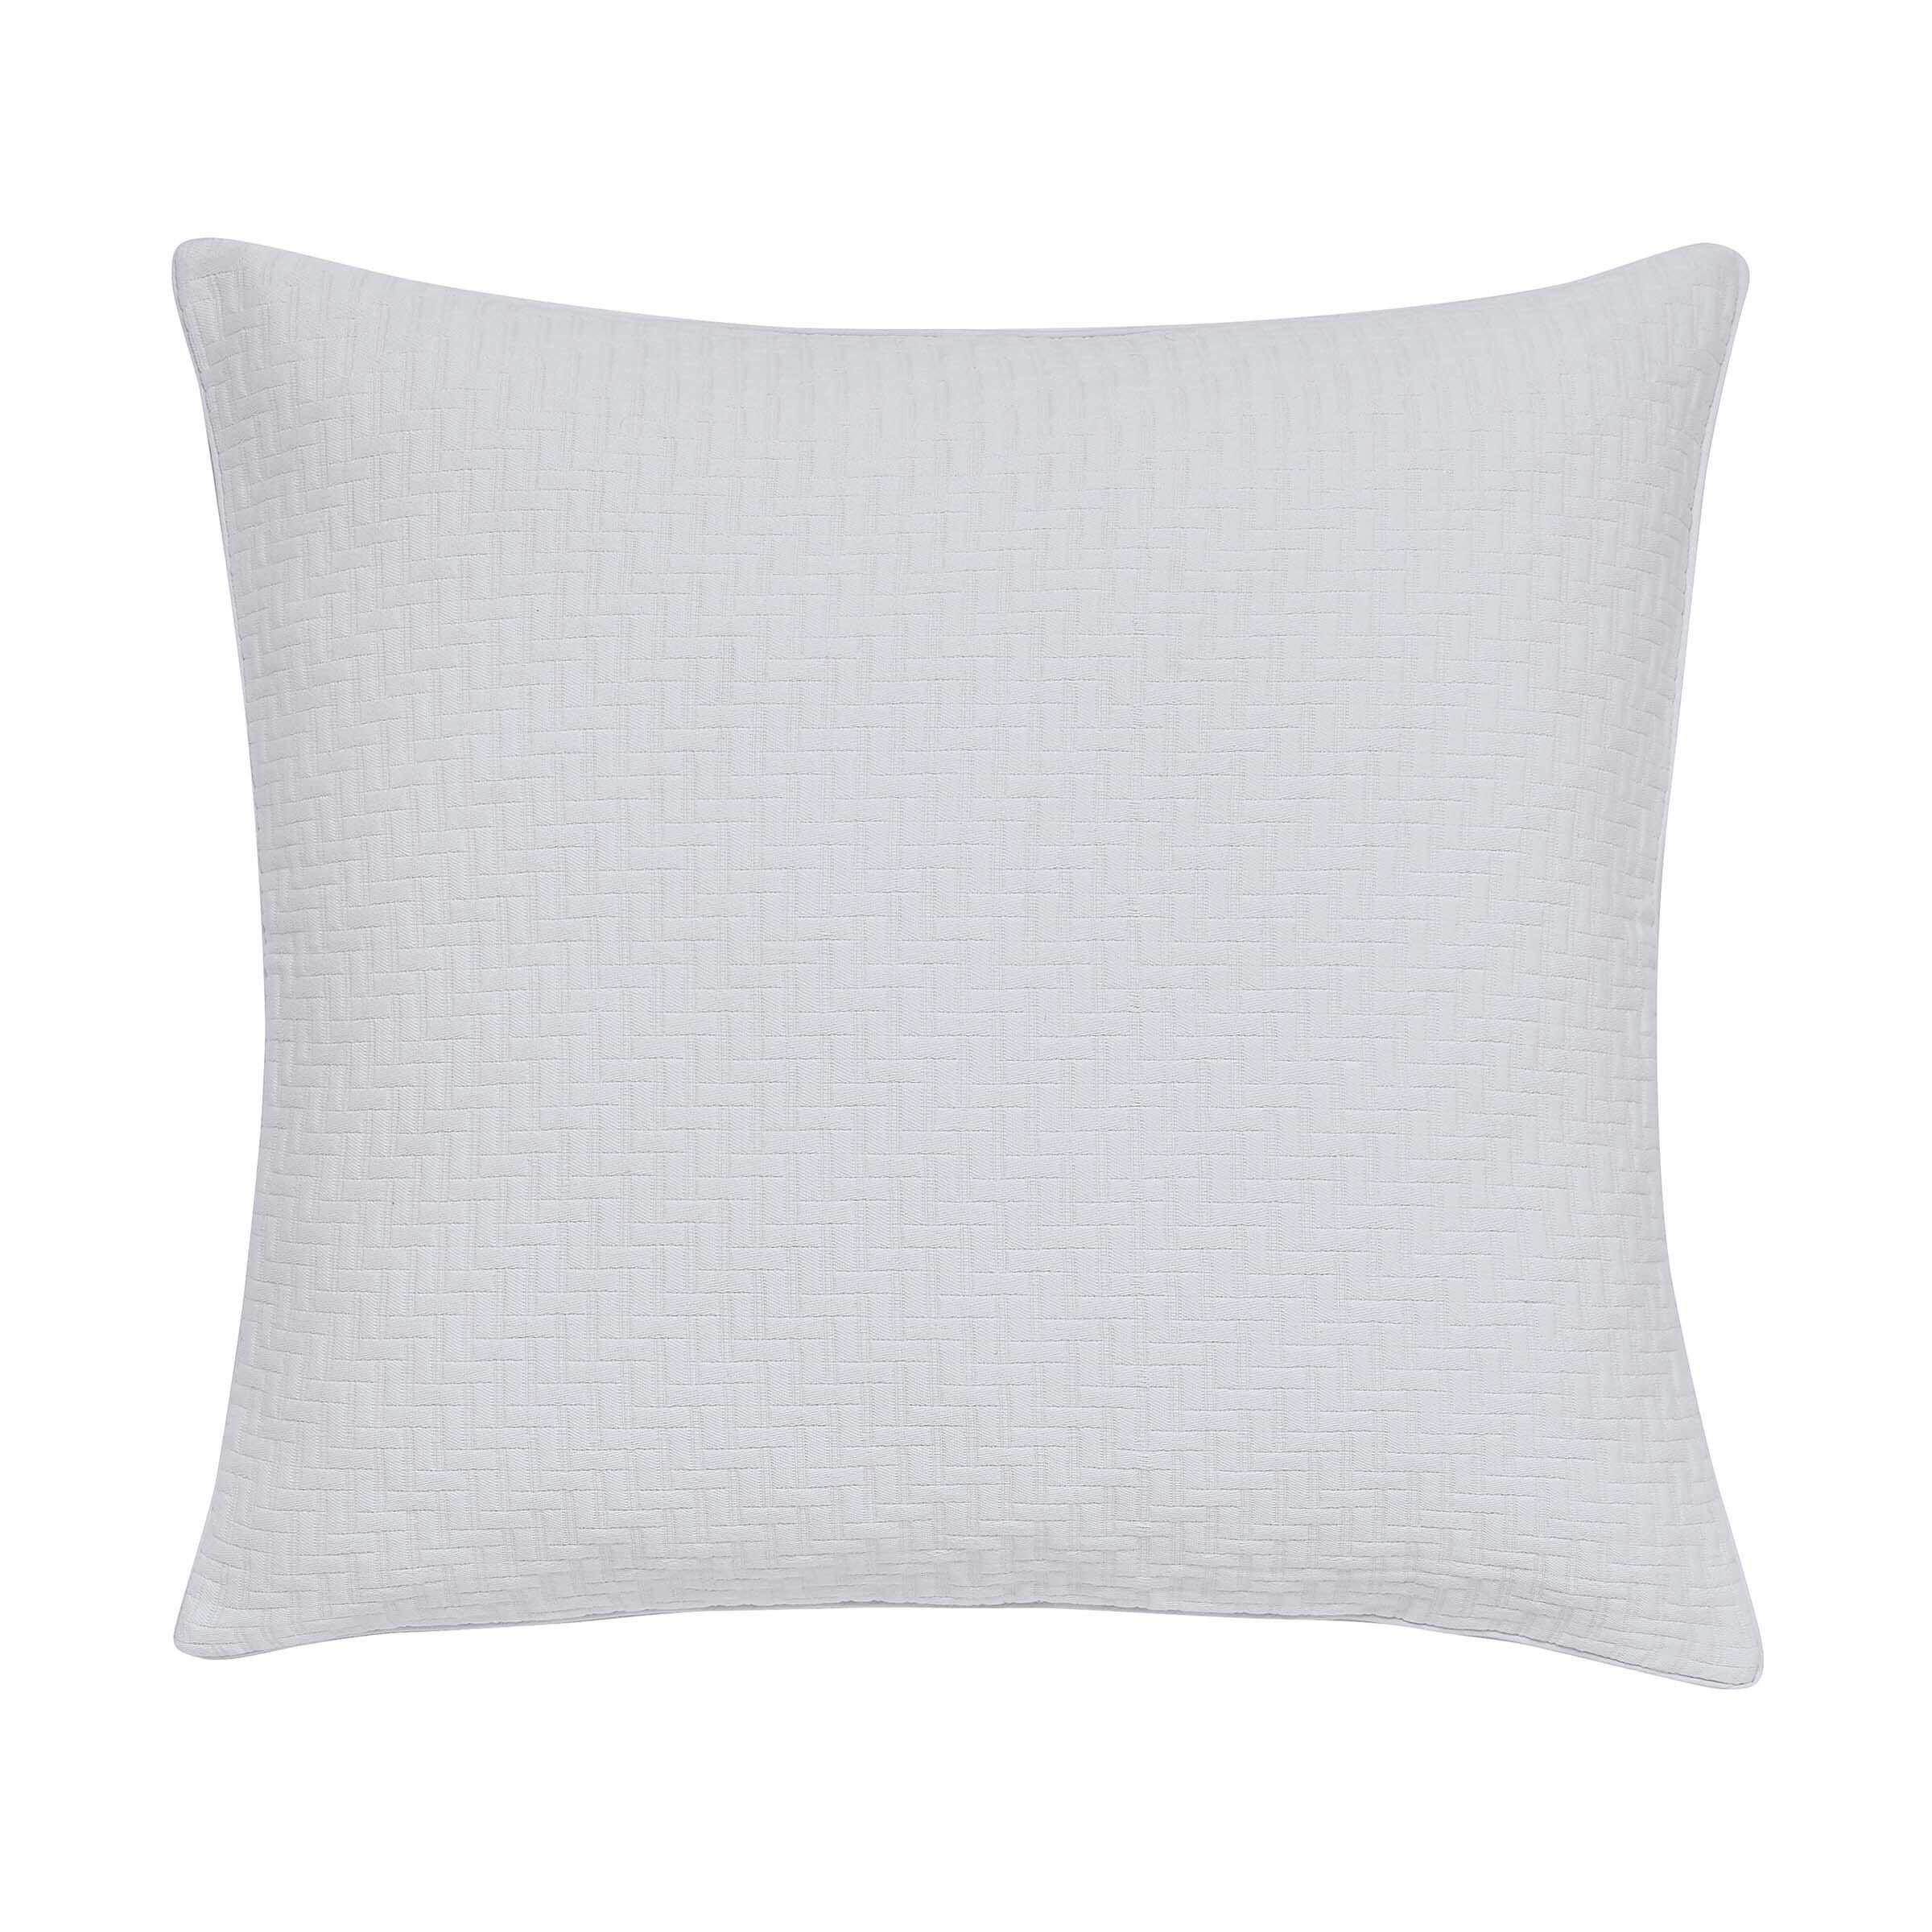 Bedeck of Belfast Fine Linens Andaz Cushion 50cm x 50cm, White - image 1